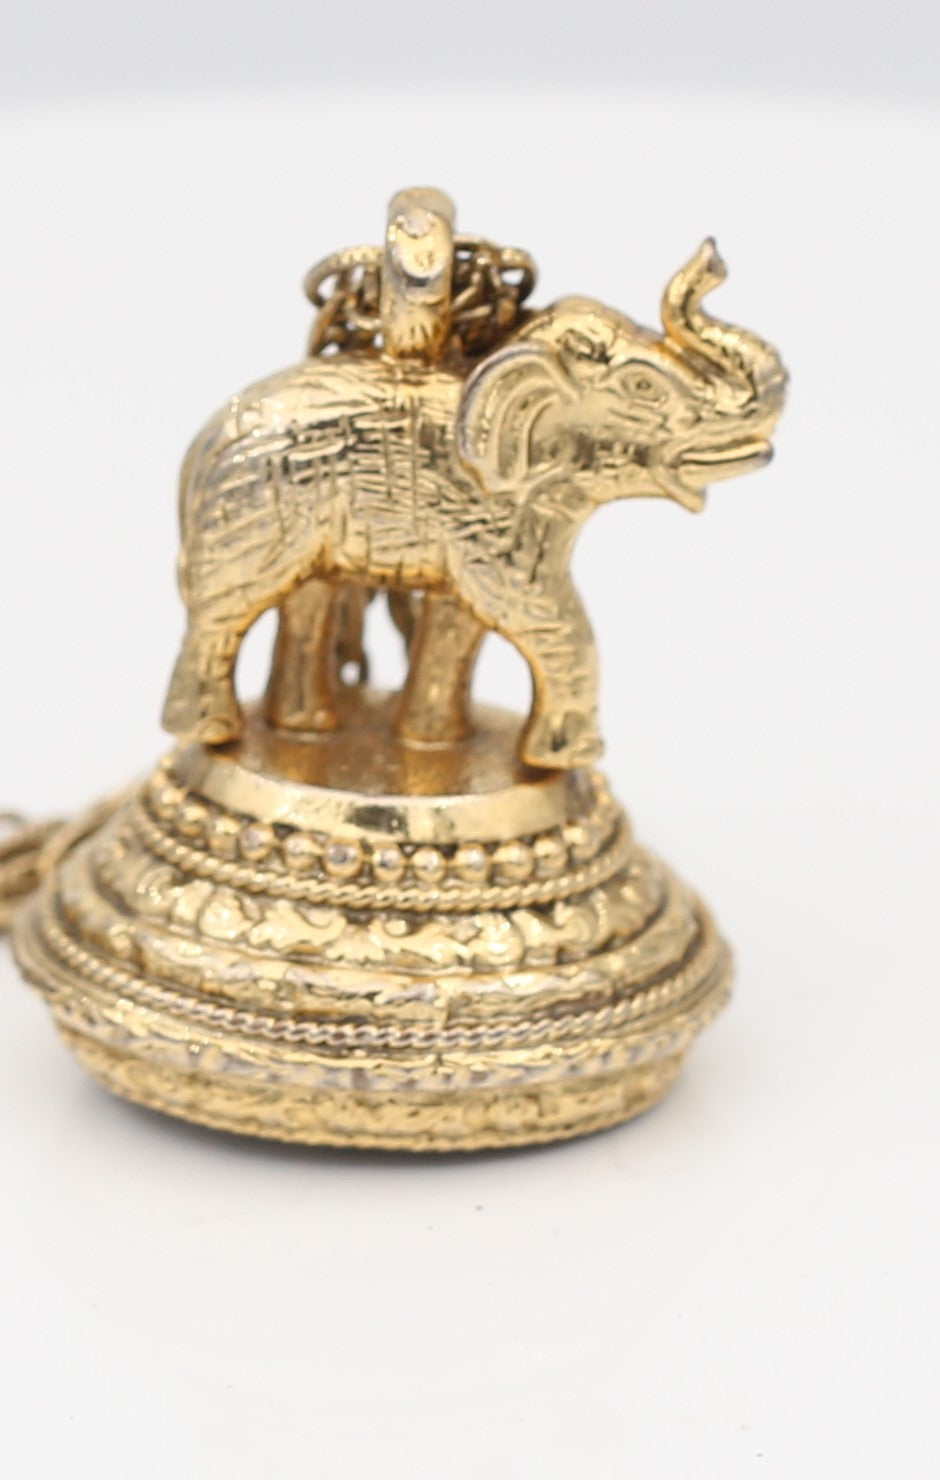 14K Elephant pendant on a chain necklace